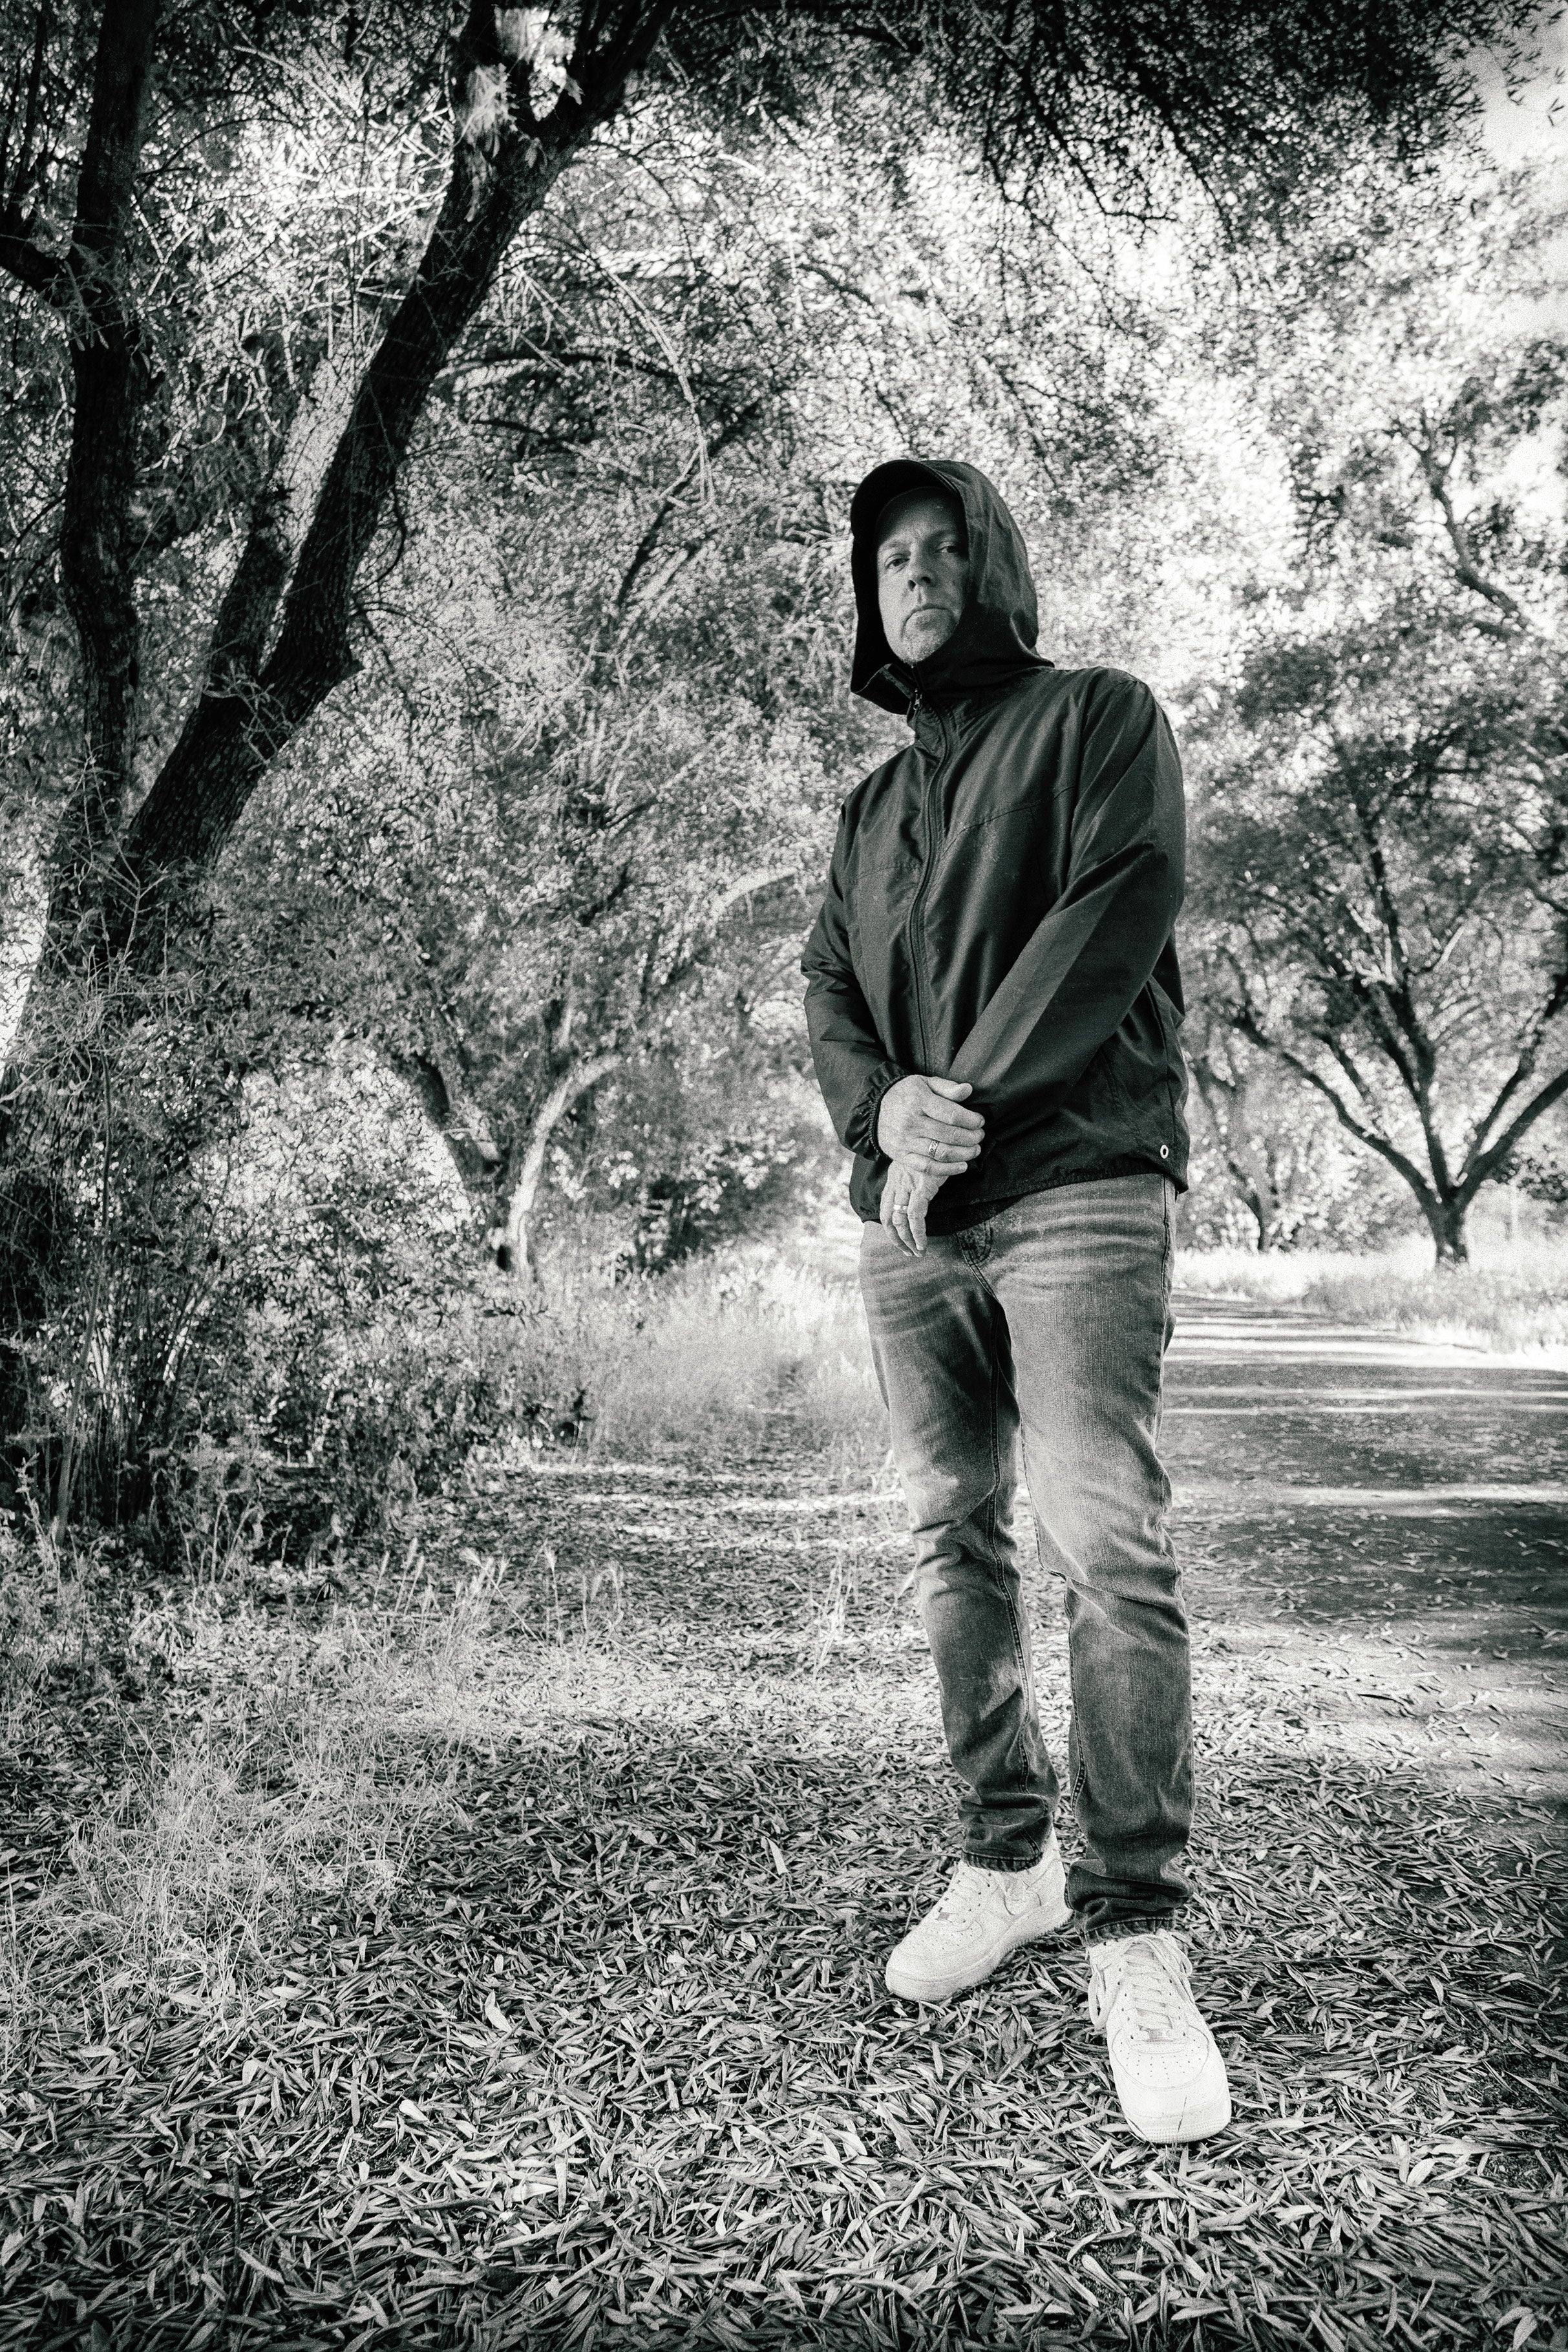 DJ Shadow in Washington promo photo for Artist presale offer code